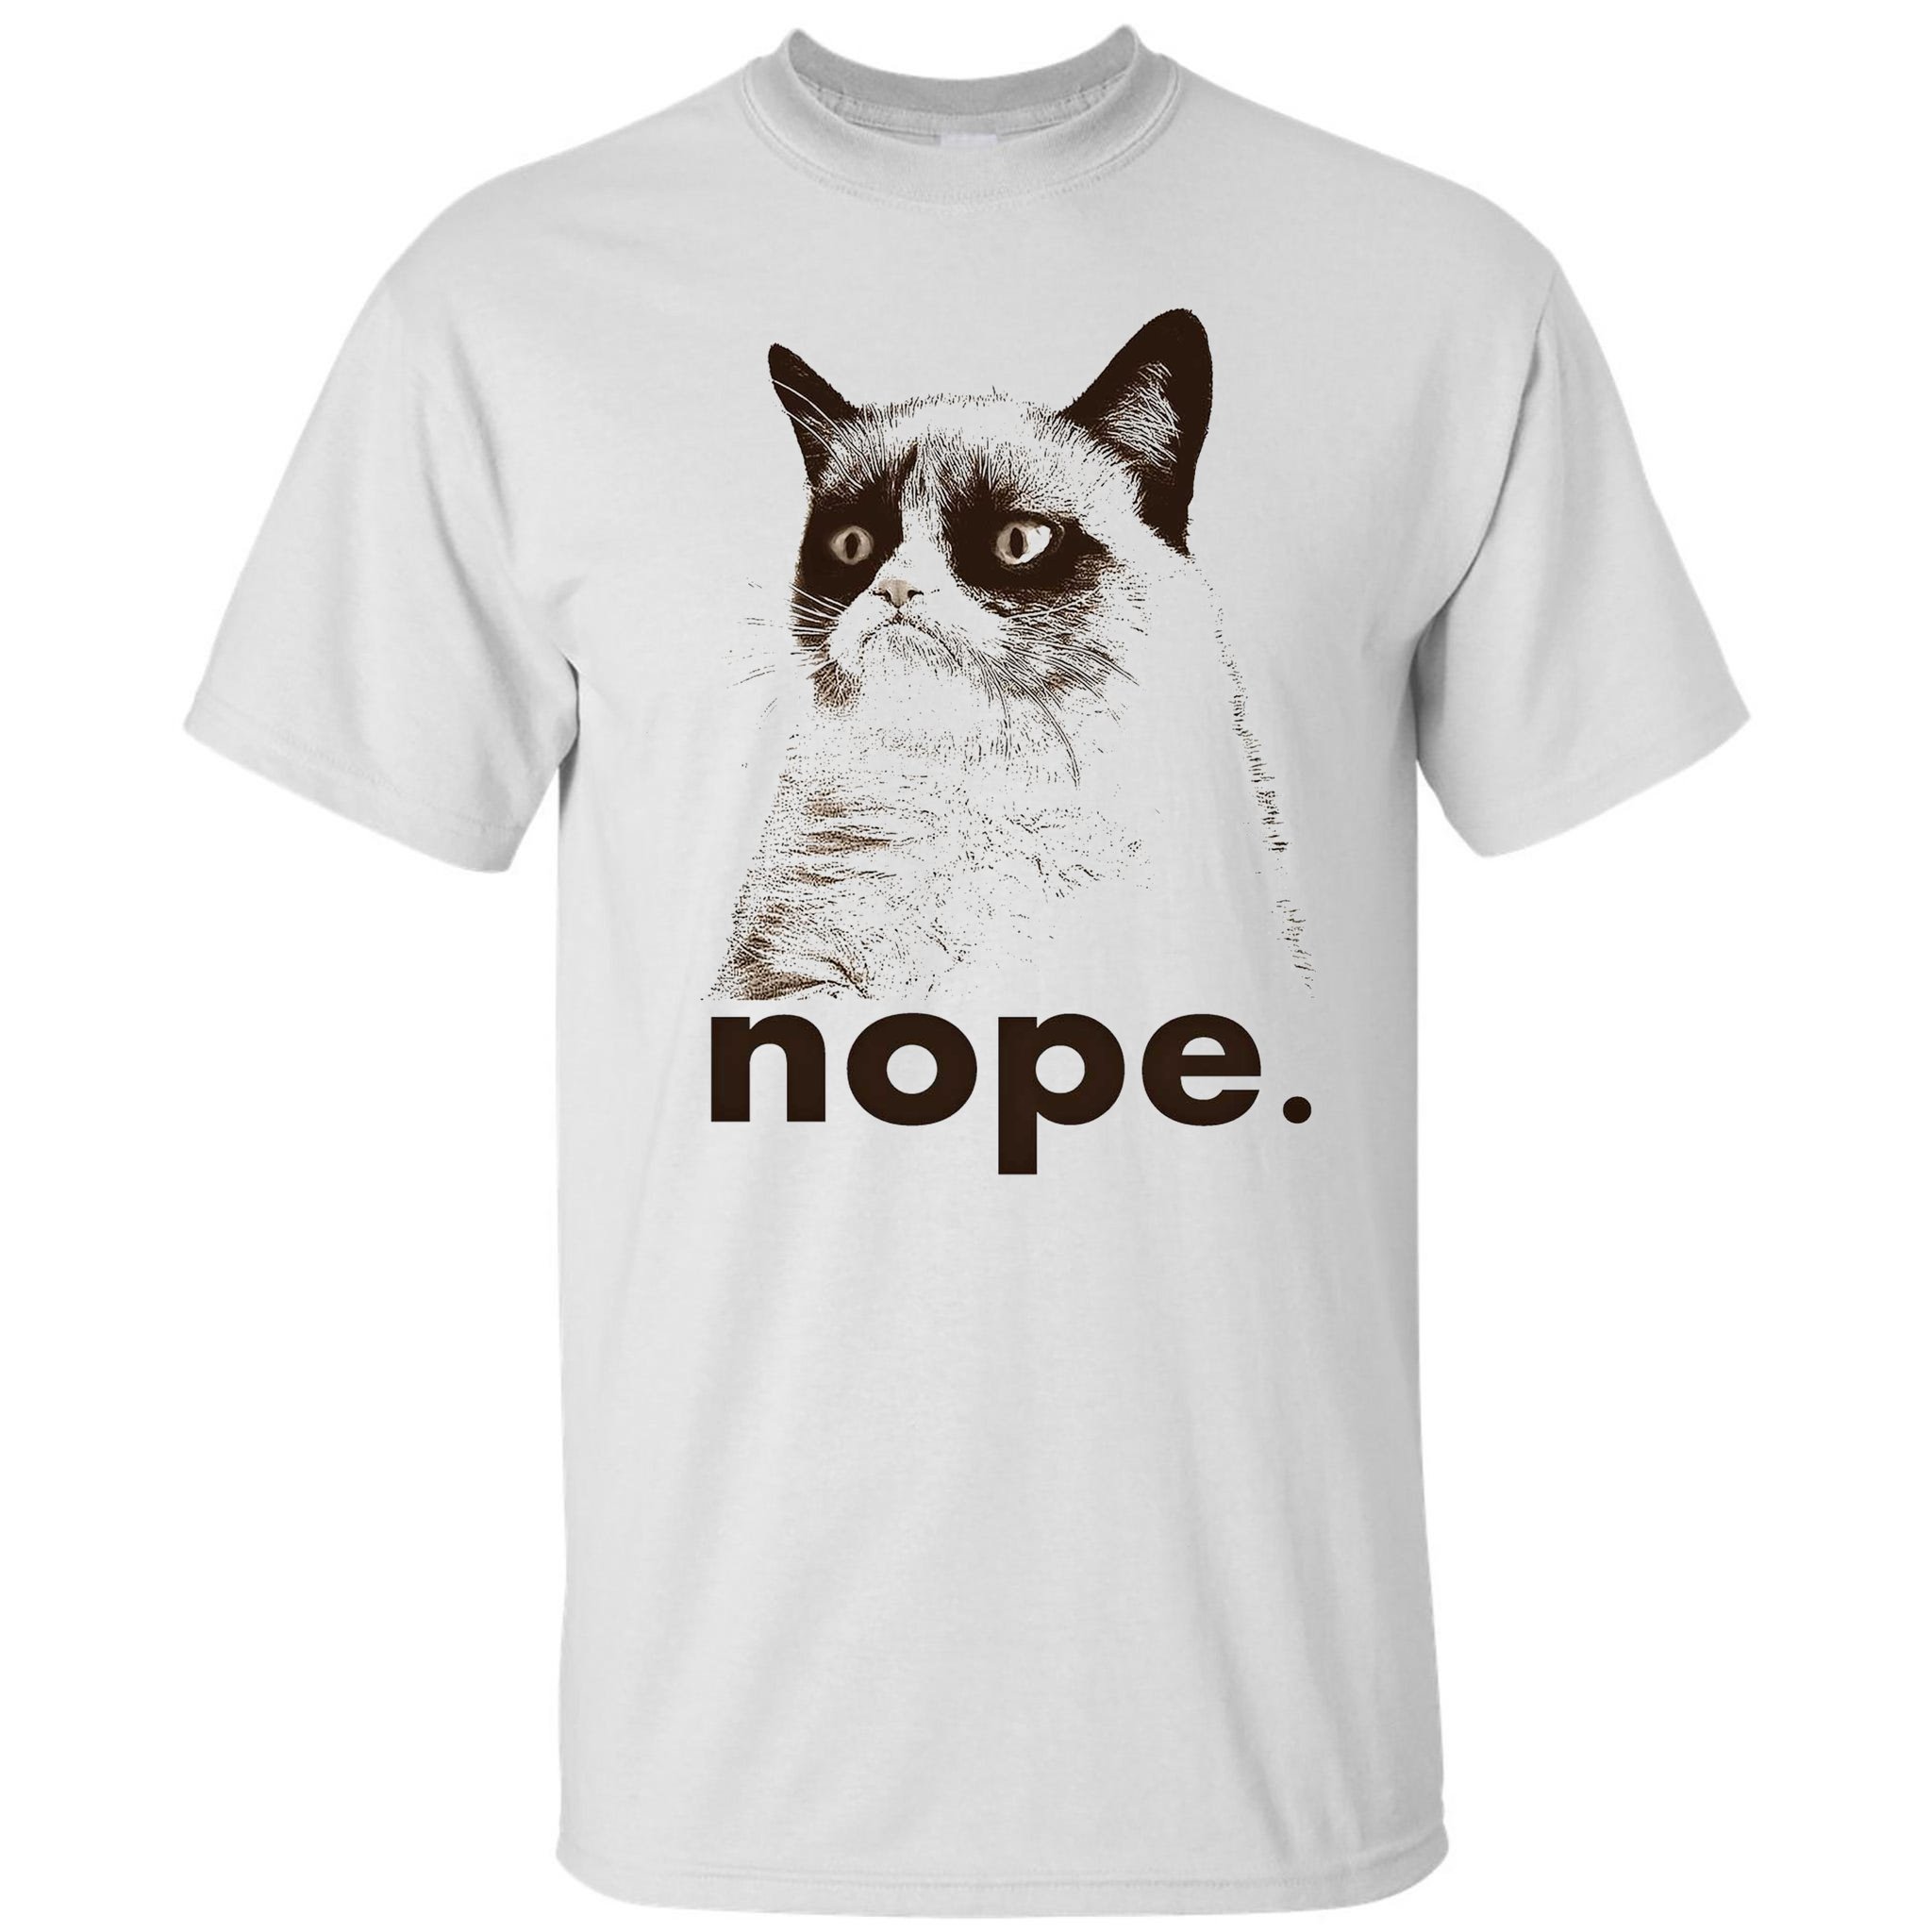 Grumpy Cat Big Grumpy Face Men's Black T-shirt NEW Sizes S-2XL 